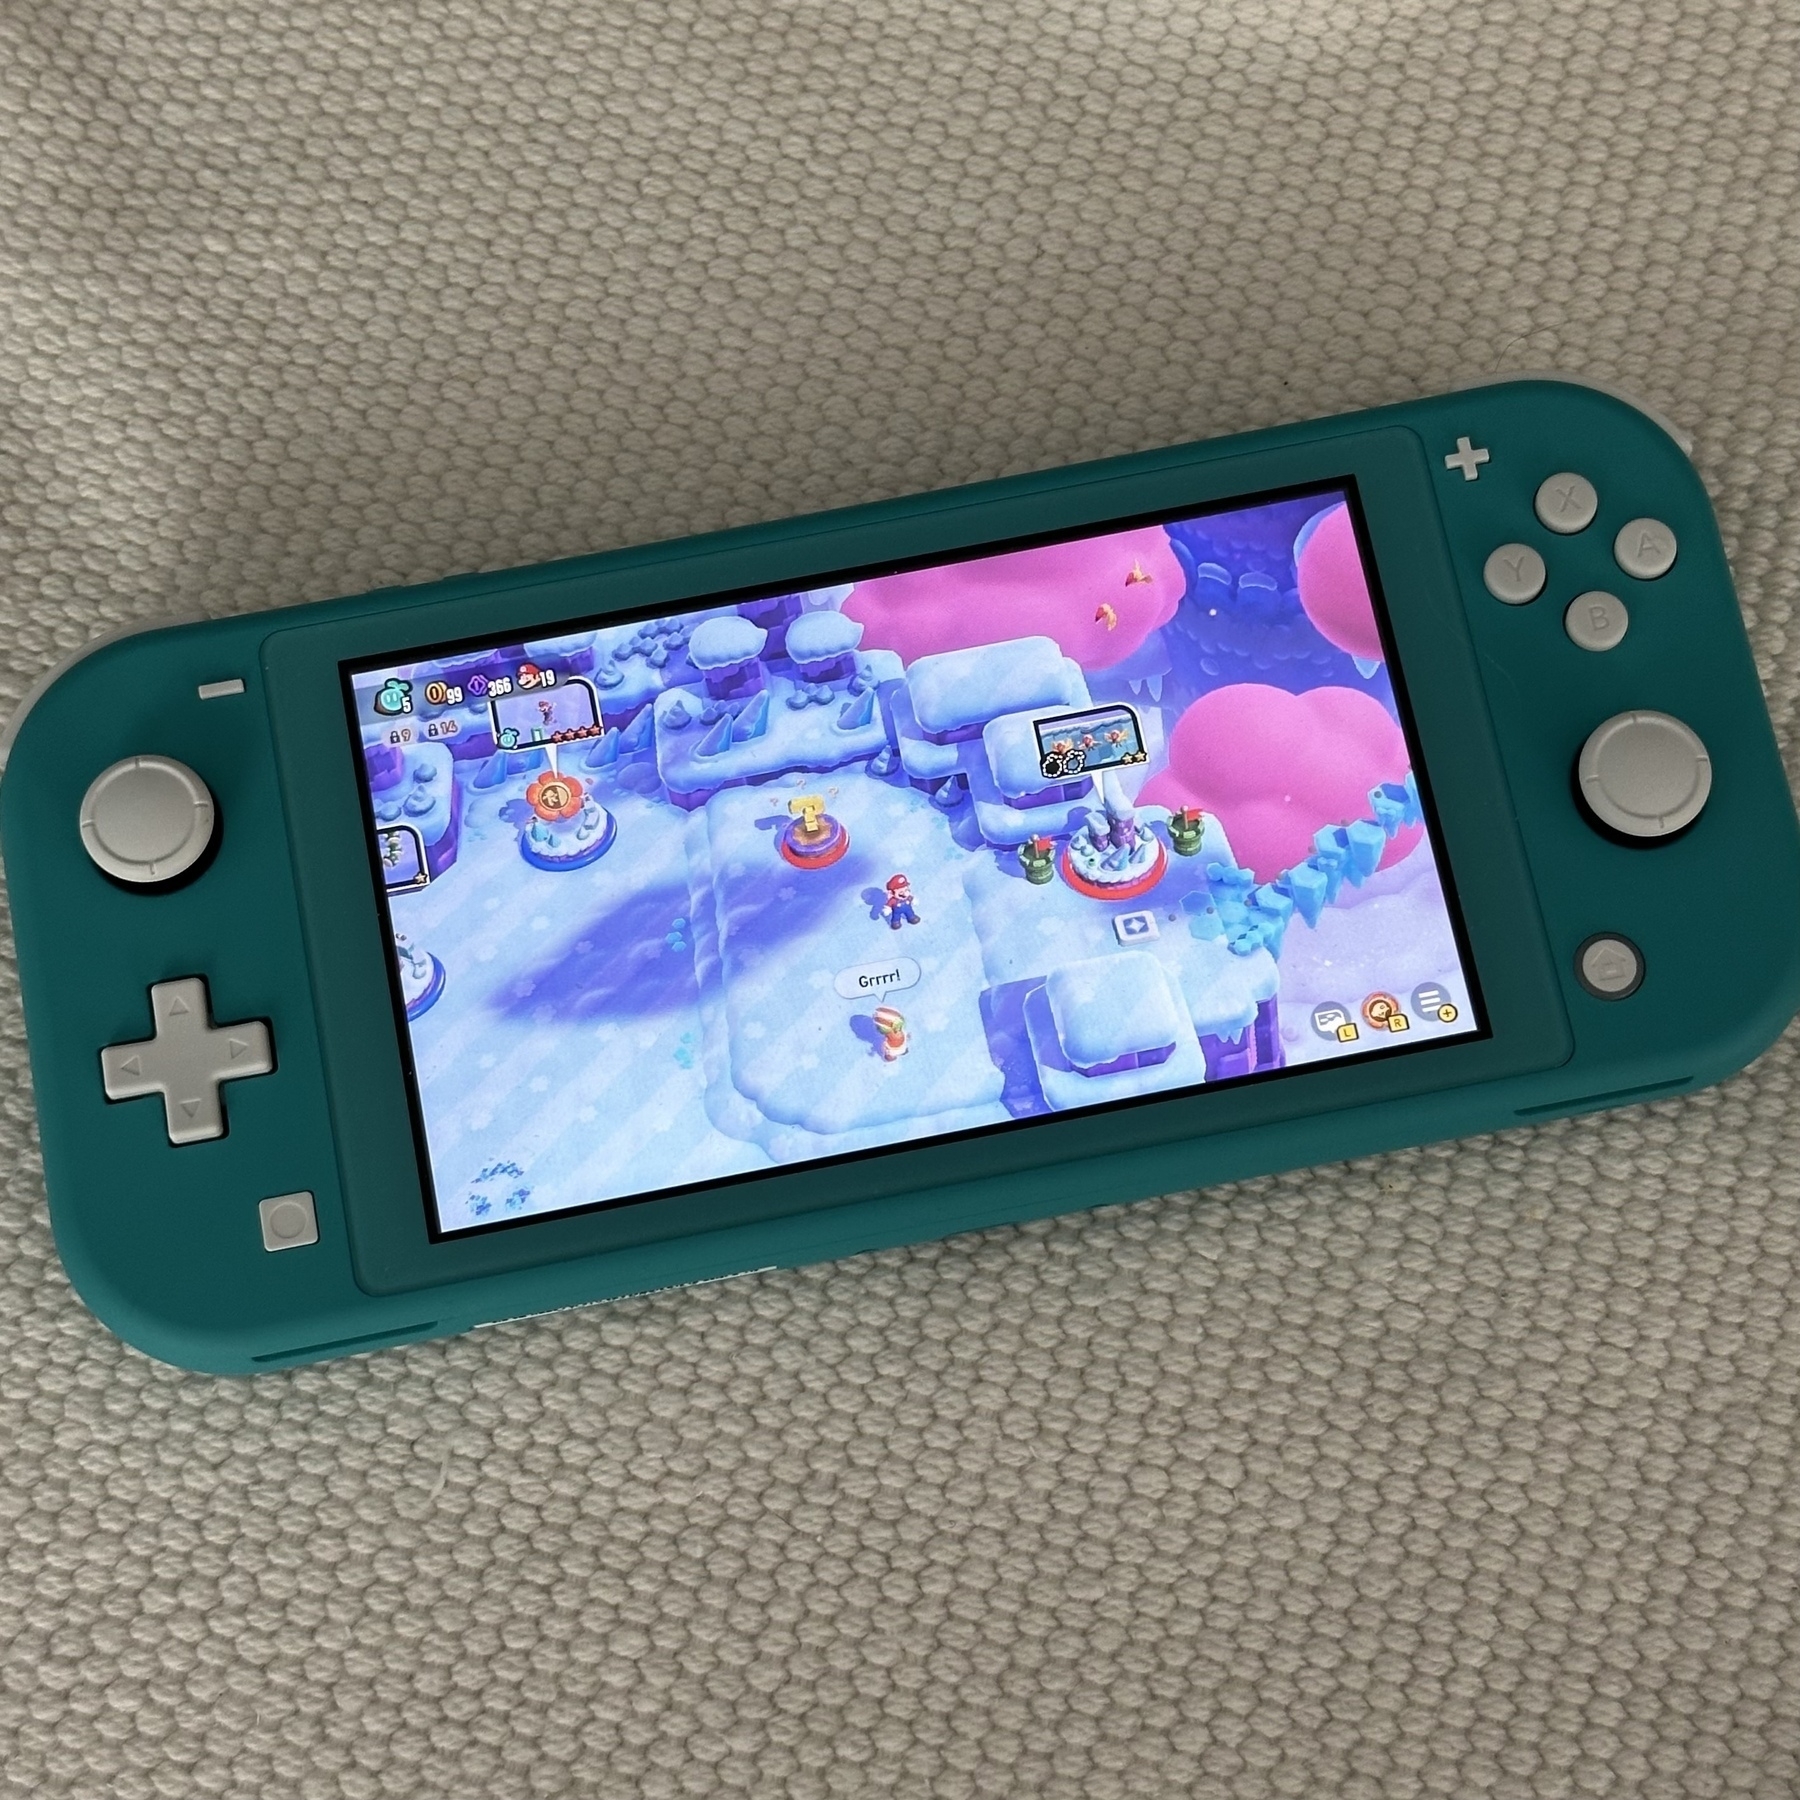 Turquoise Switch Lite playing Super Mario Bros. Wonder. 